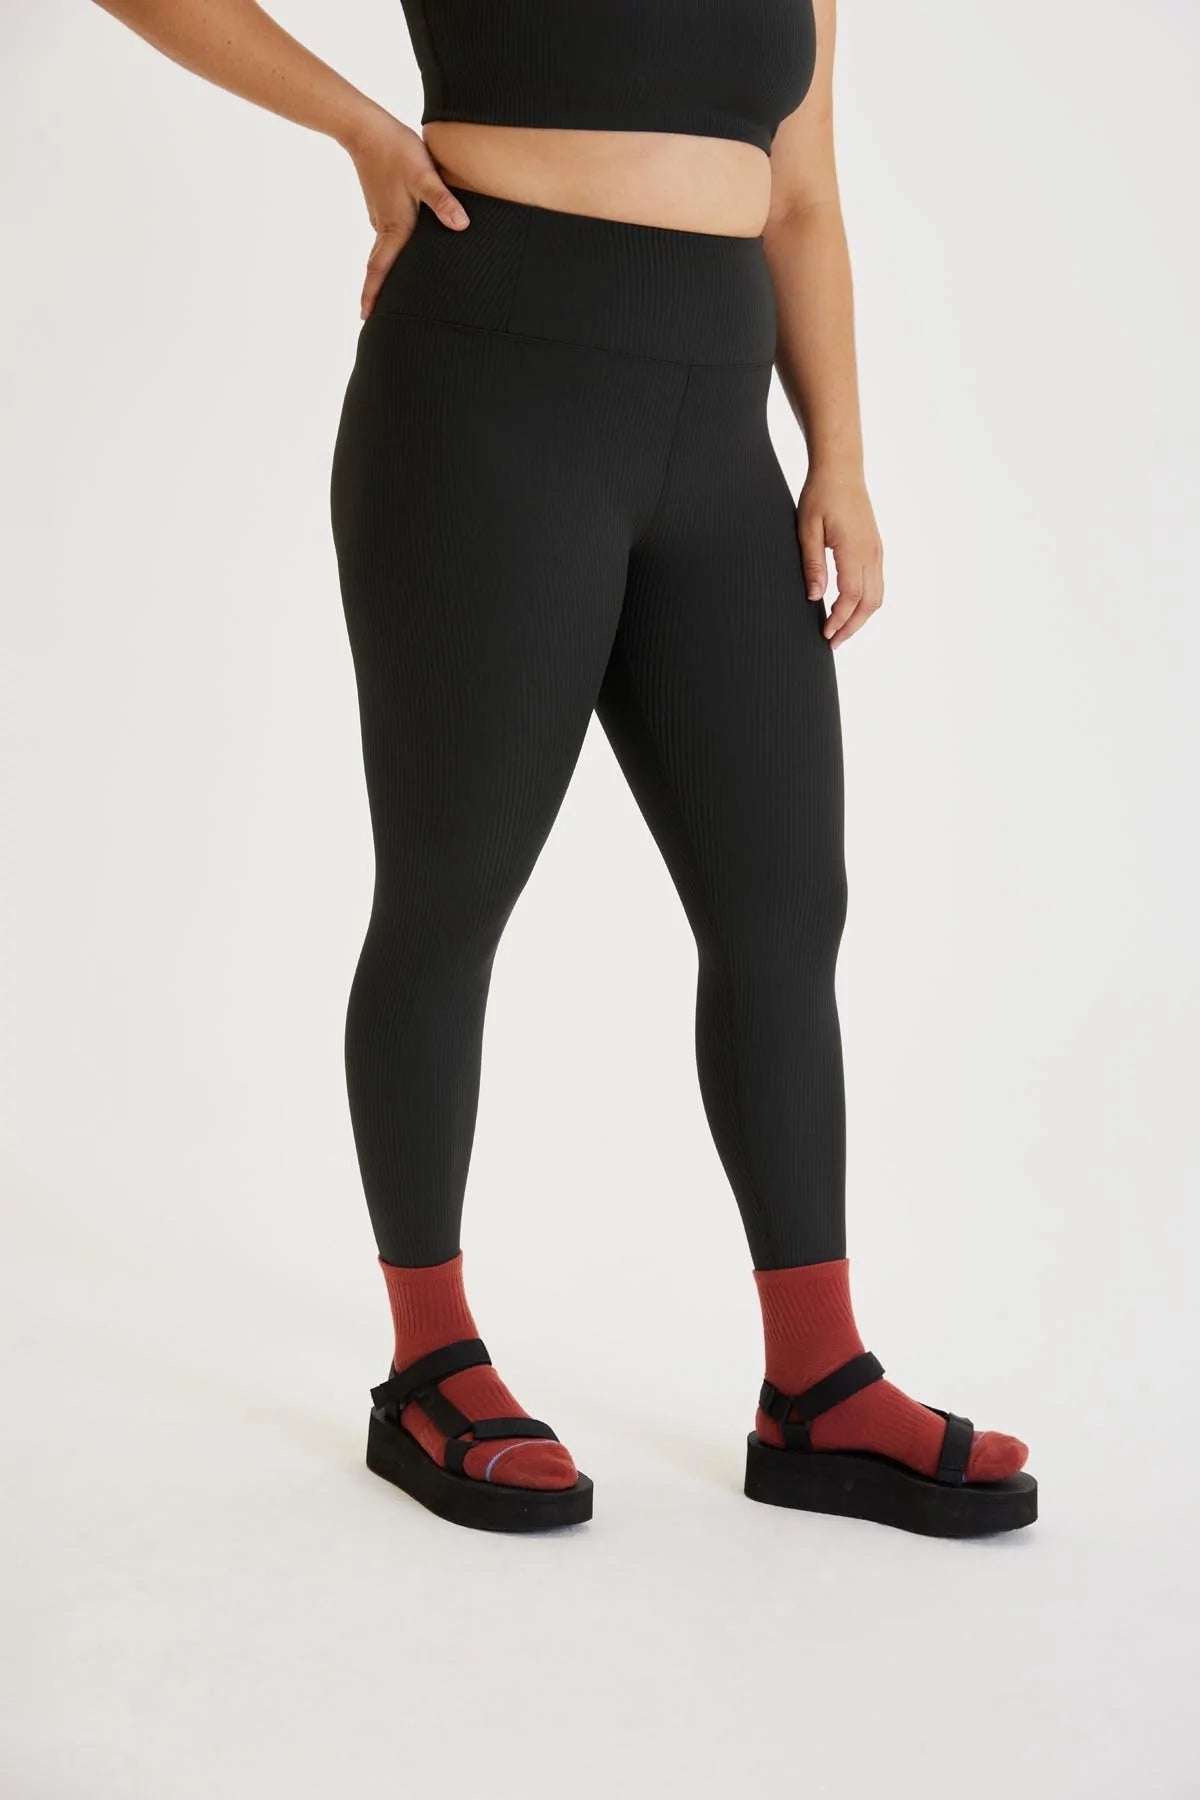 Women's Performance Leggings - Athletic Pants – Nine Line Apparel